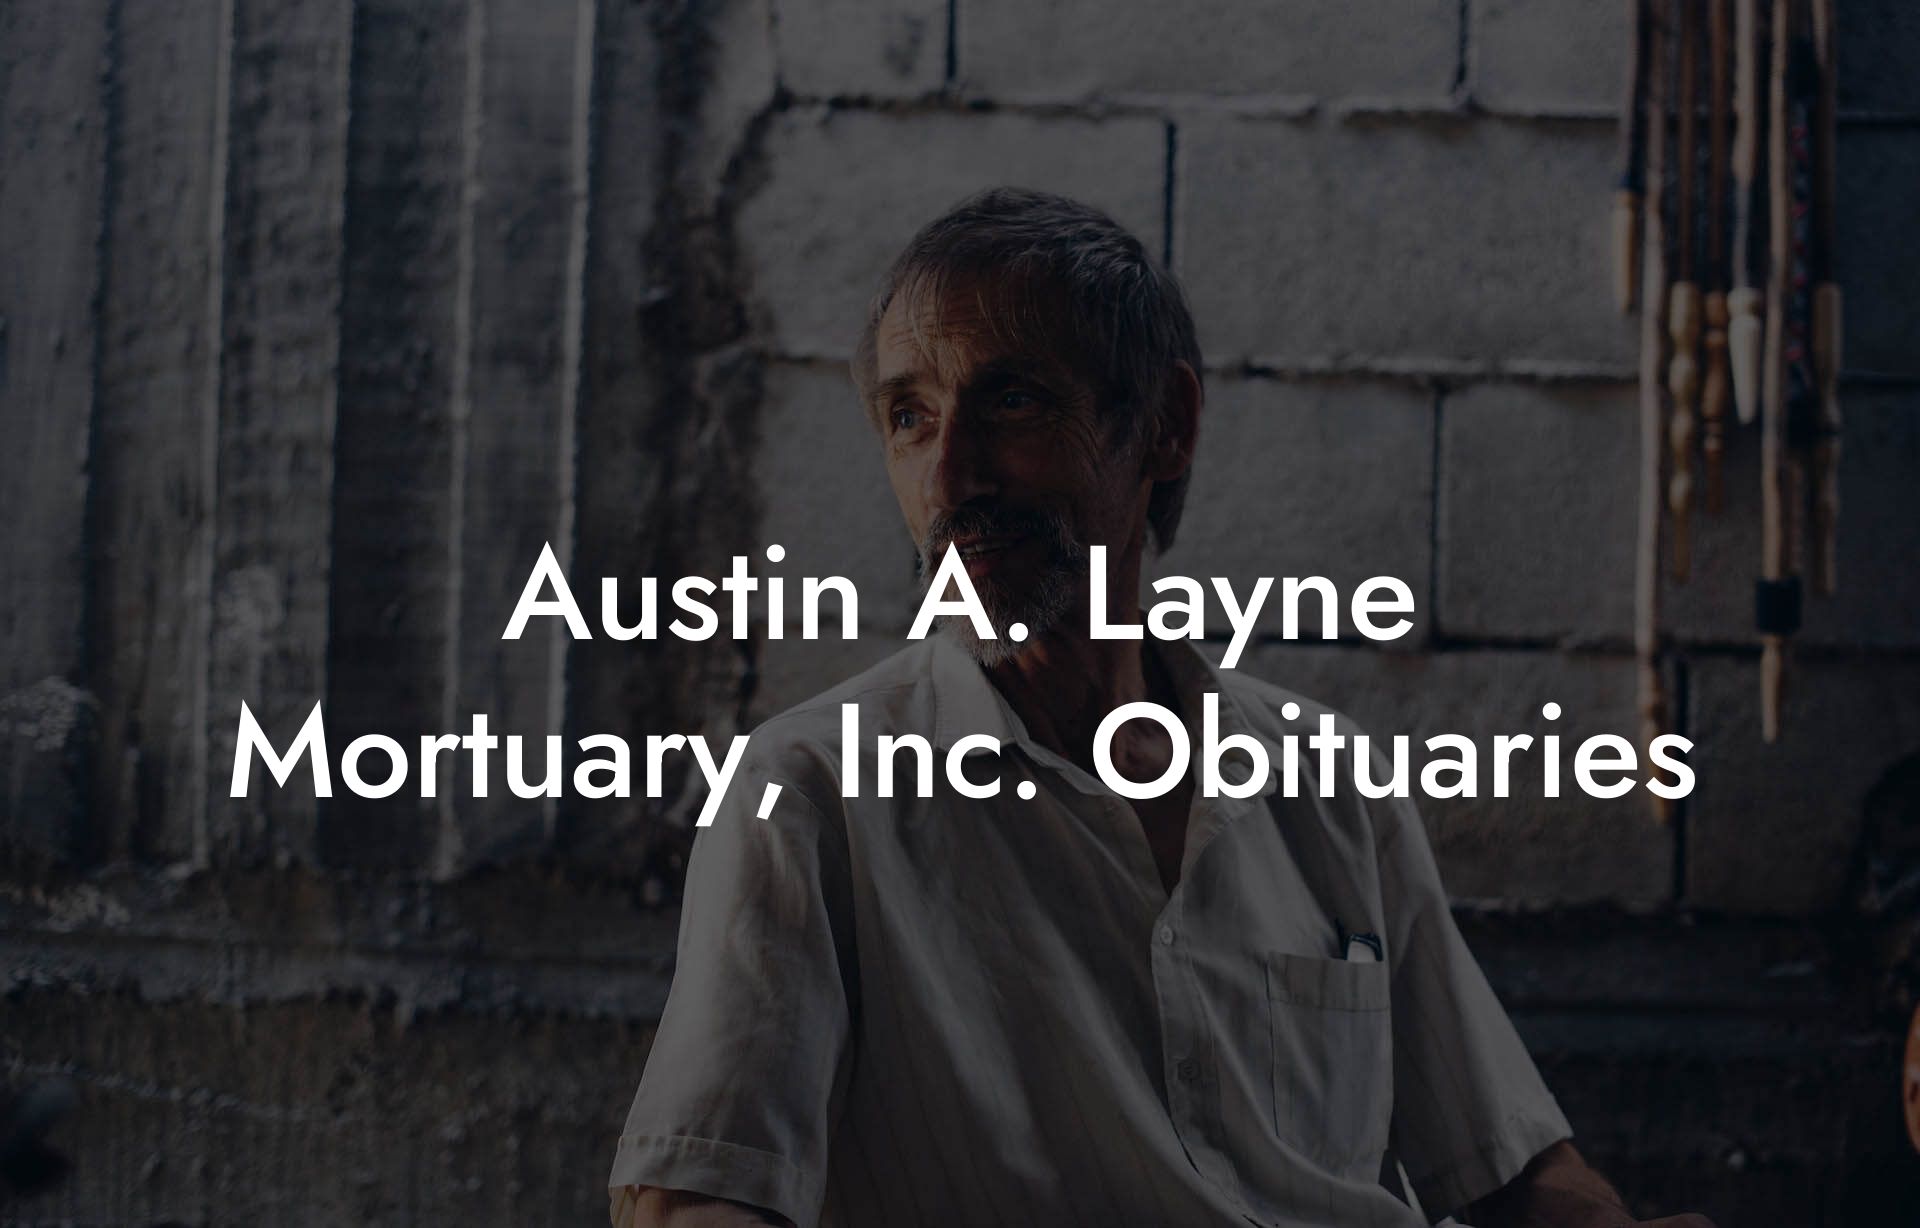 Austin A. Layne Mortuary, Inc. Obituaries